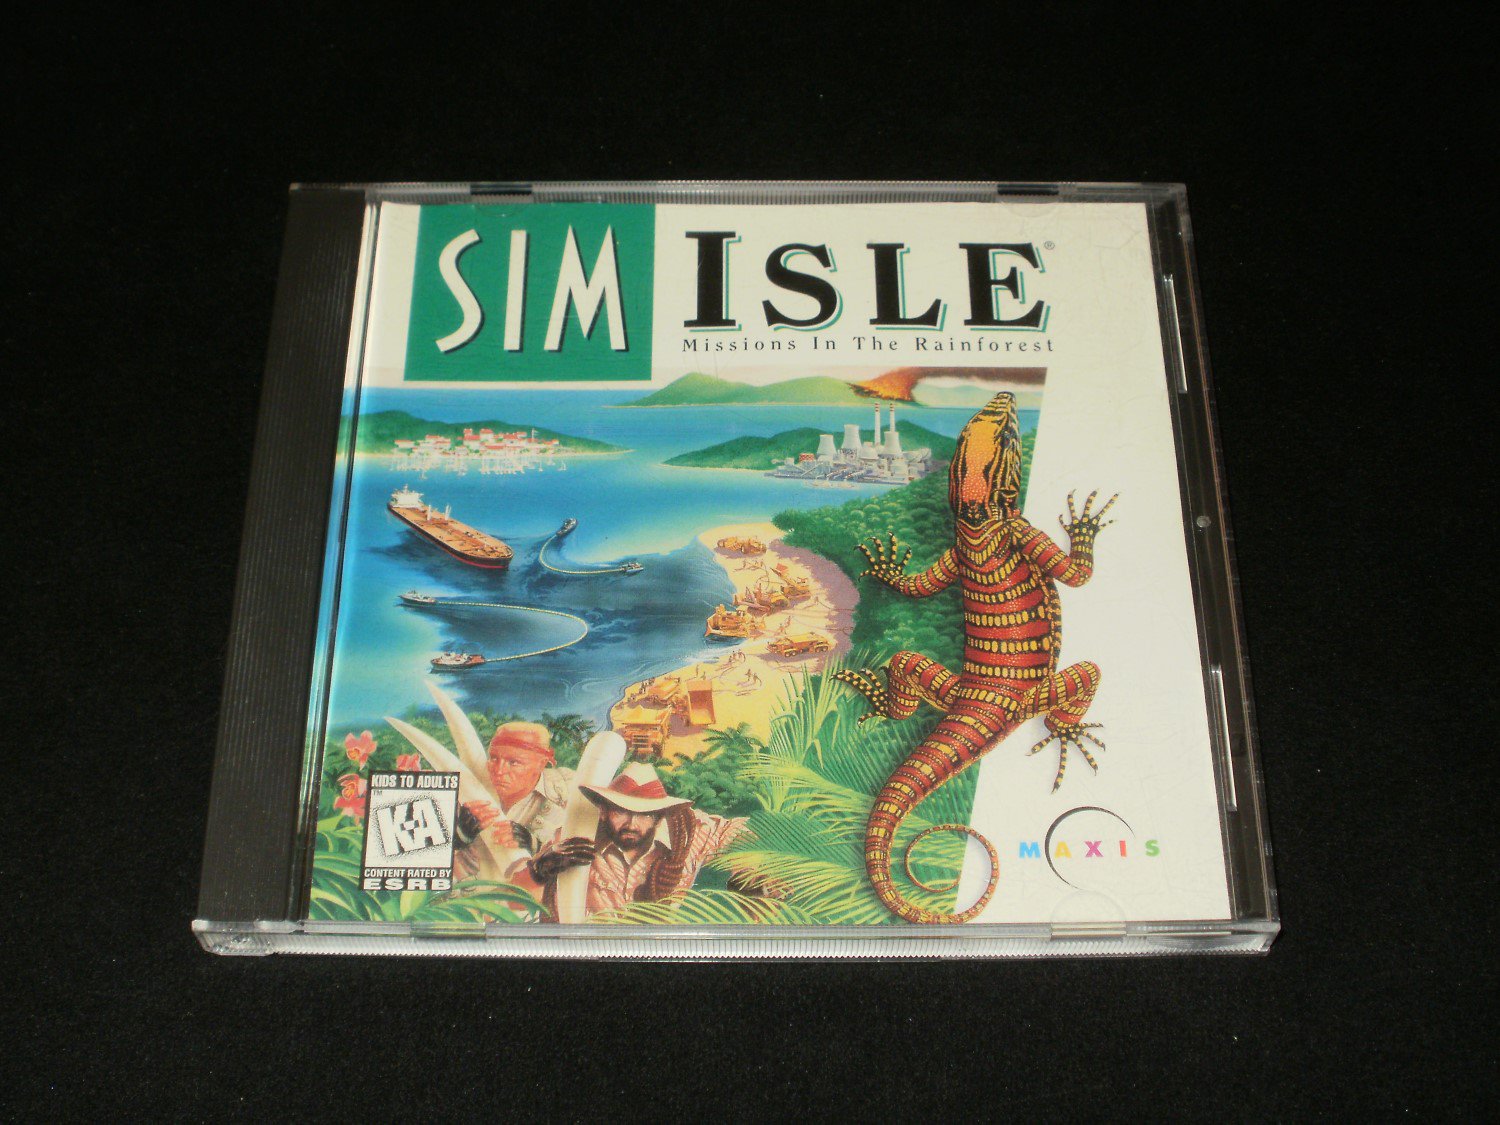 download sim isle